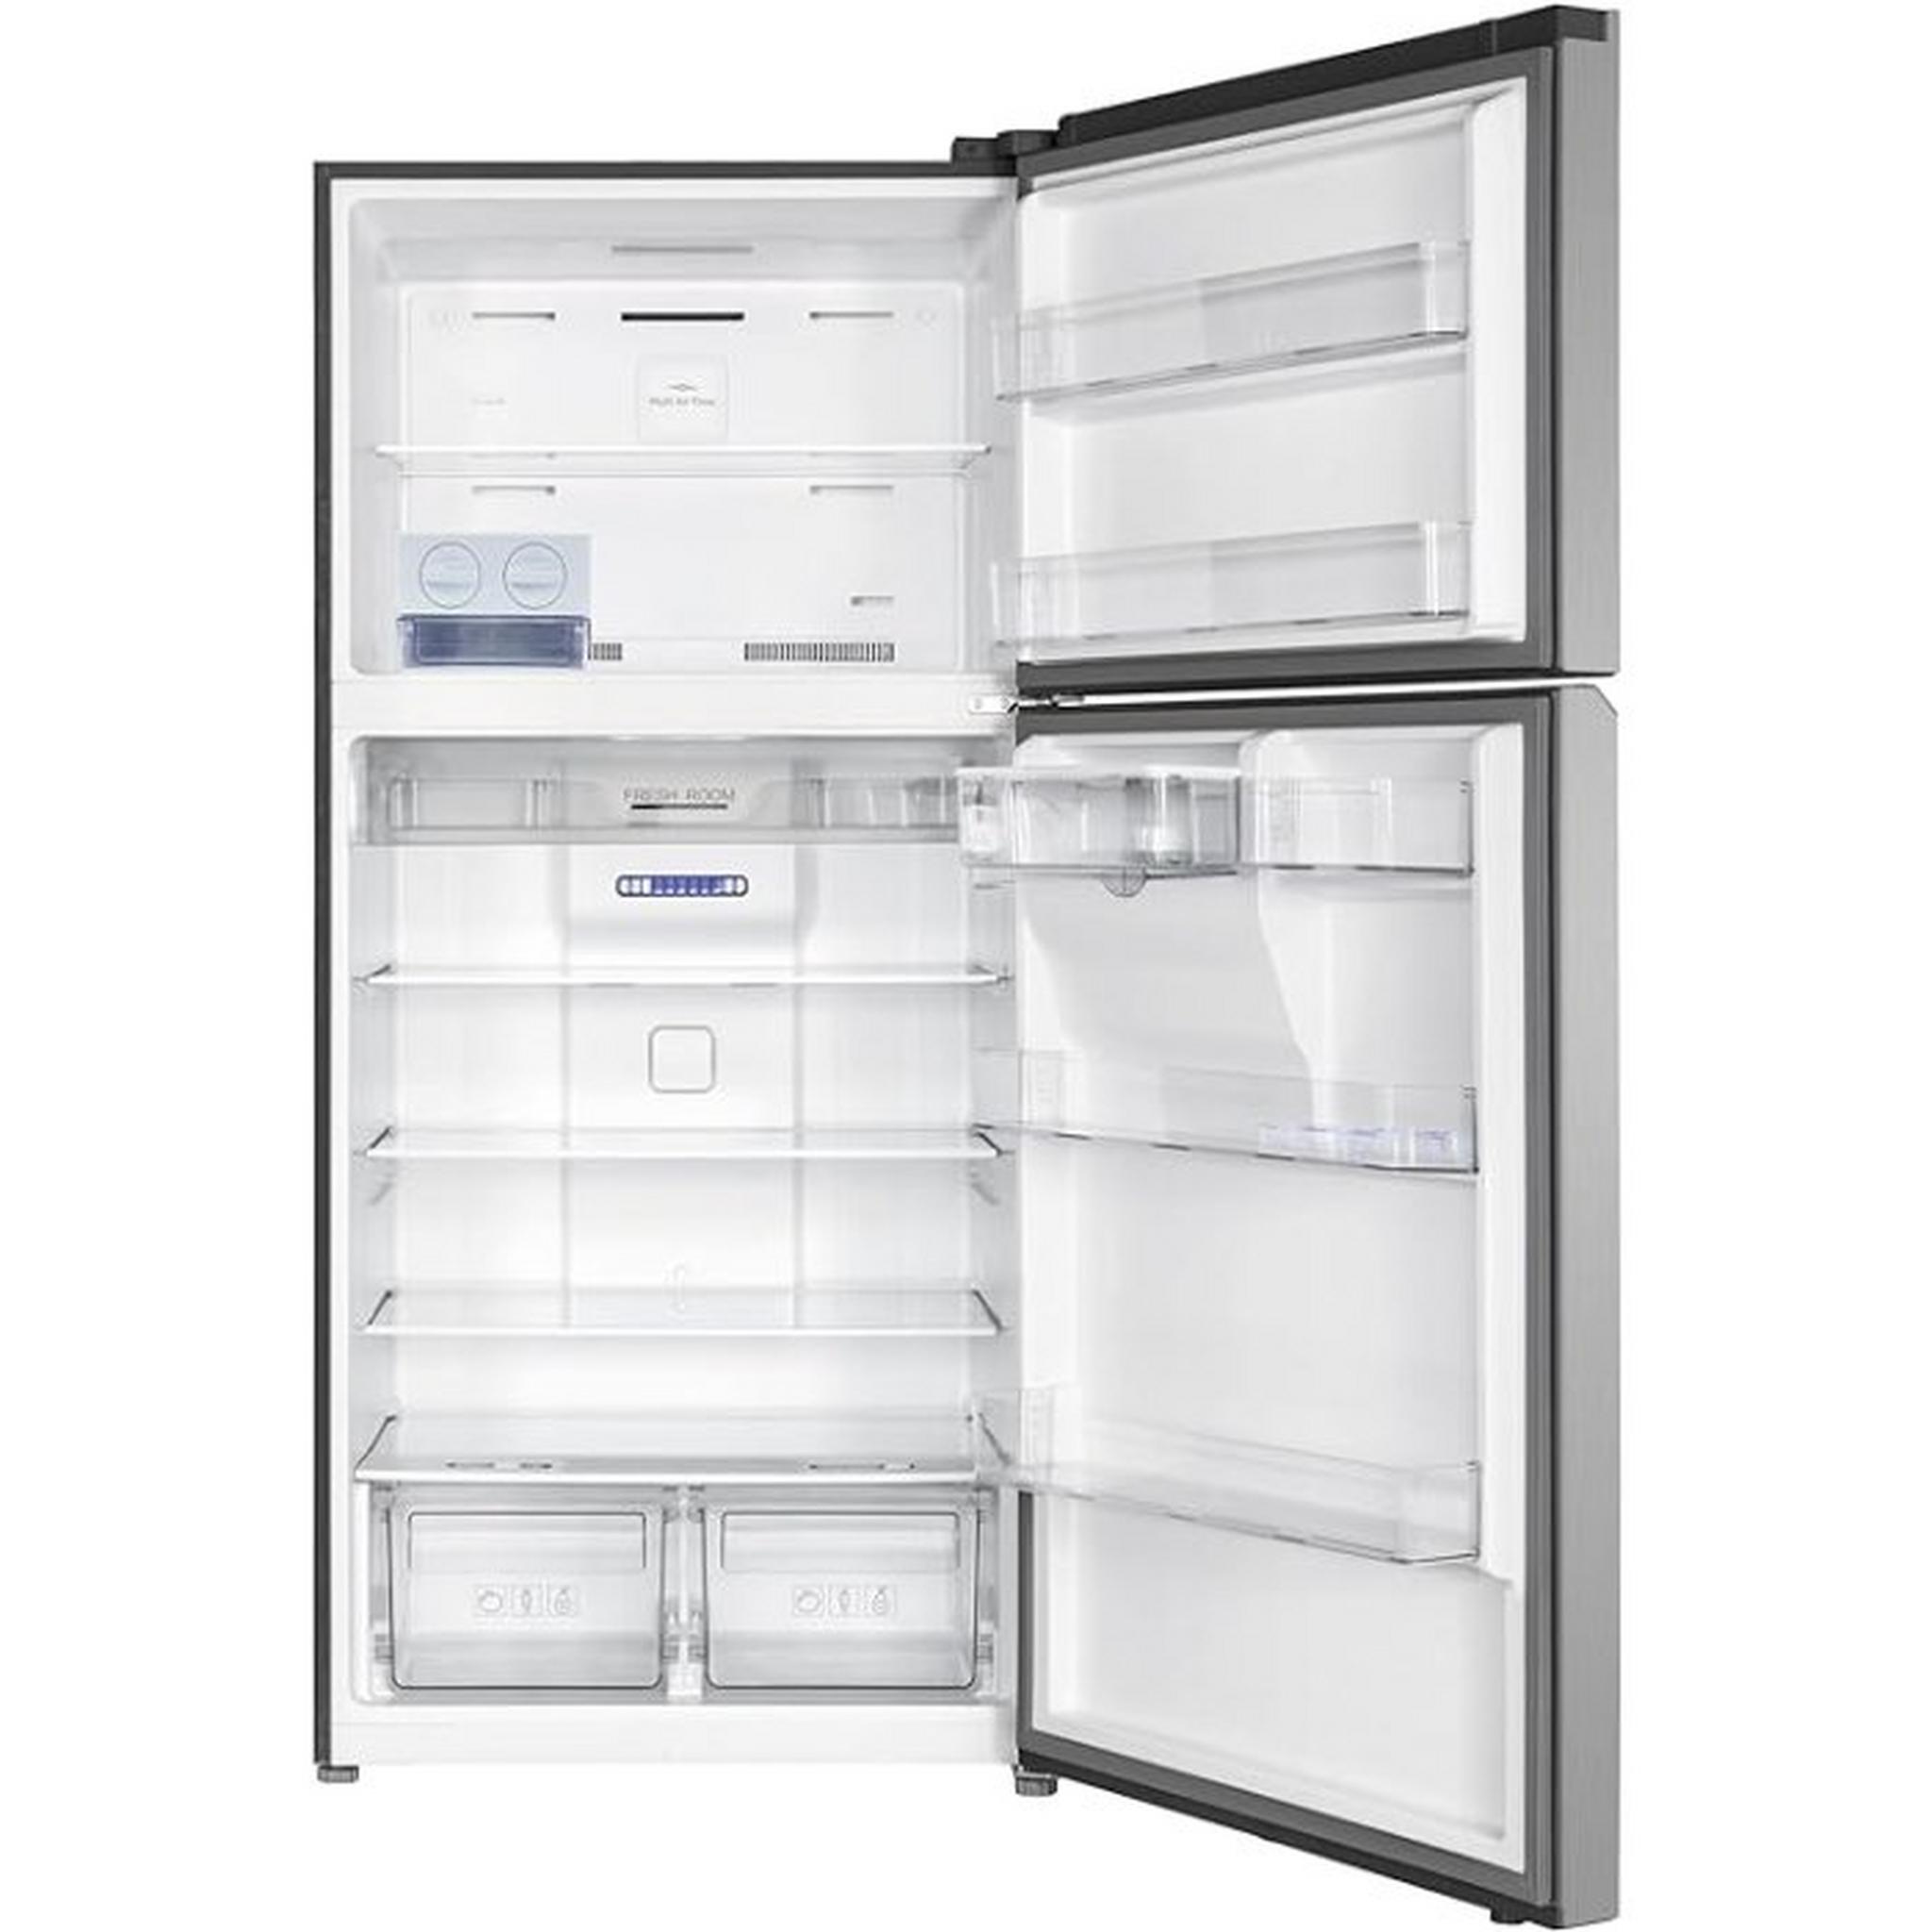 TCL Top Freezer Refrigerator, 27.8 CFT, 787 Liter, P787TMN - Inox